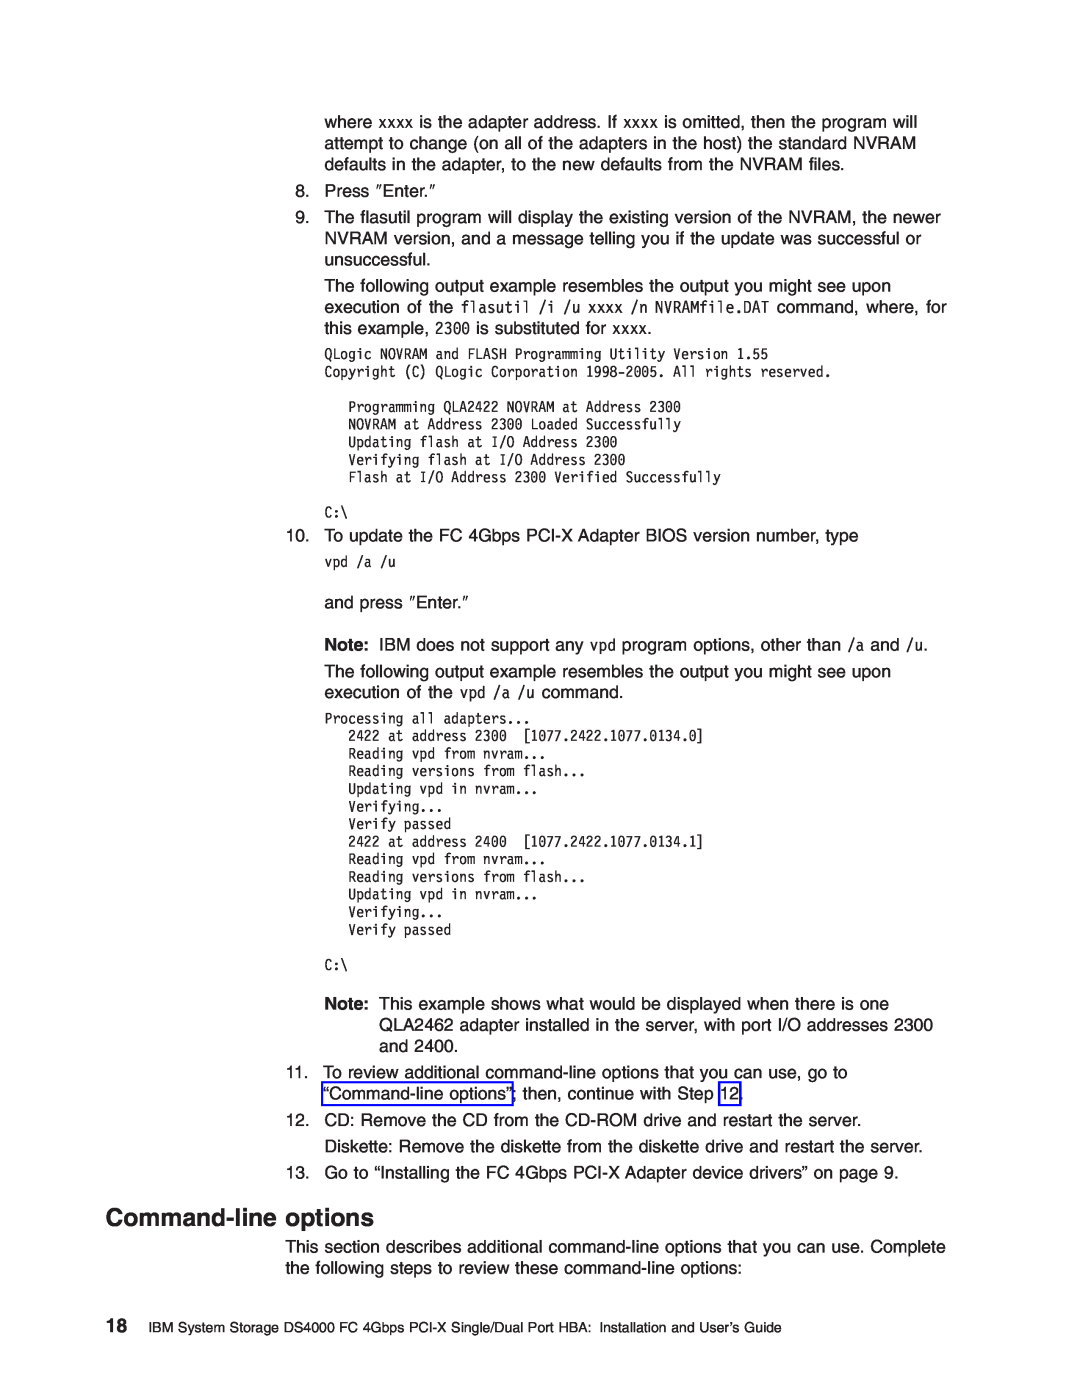 IBM DS4000 FC manual Command-line options 